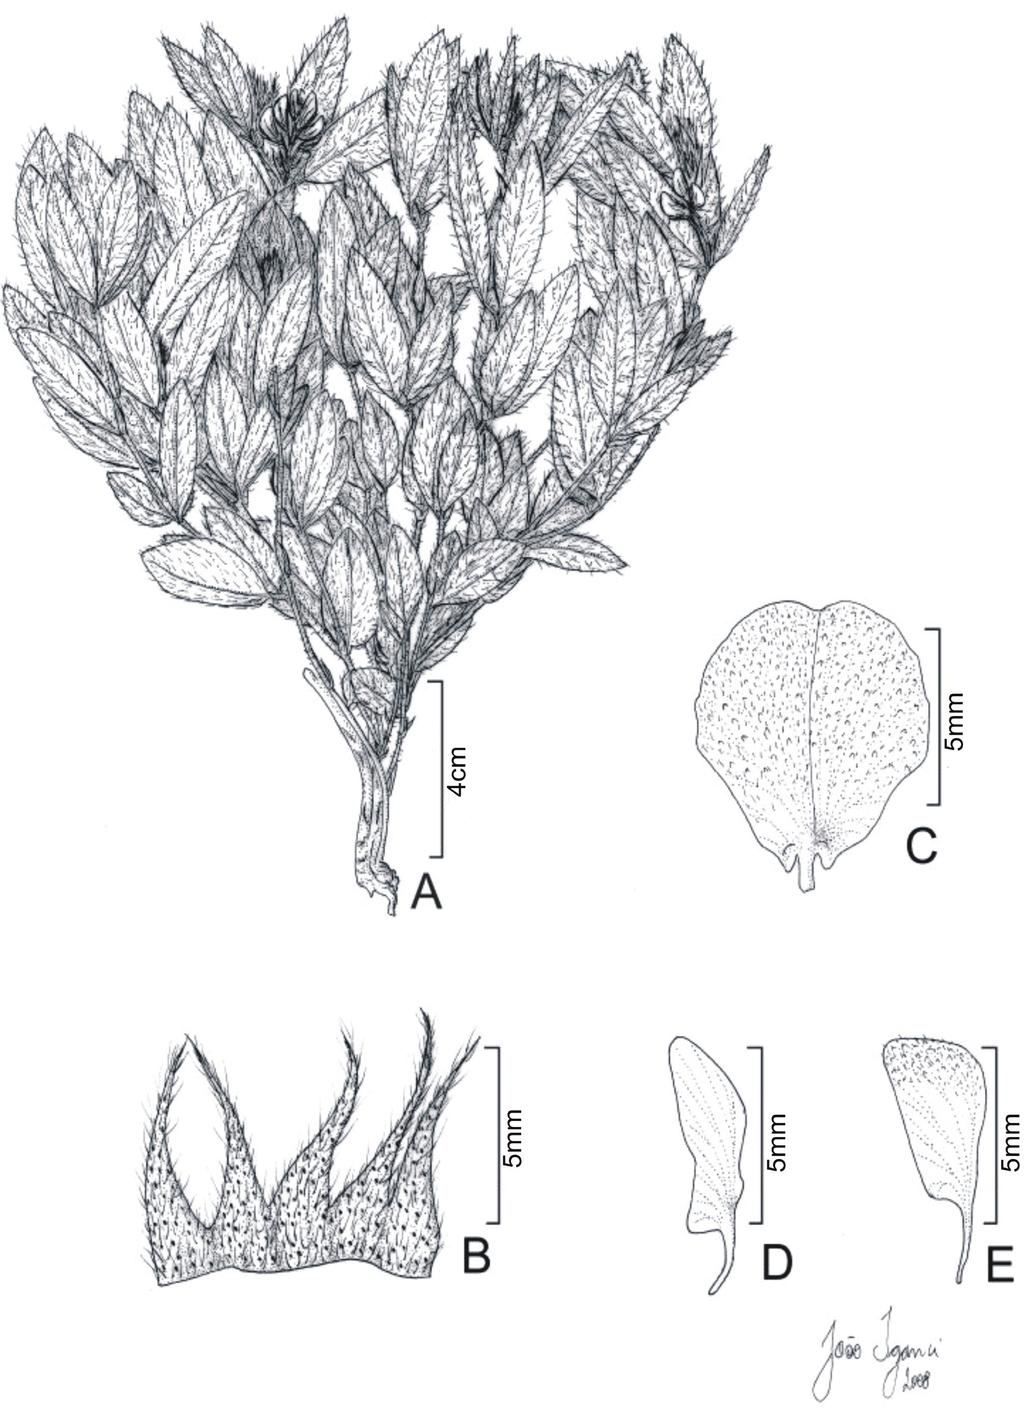 358 Rogalski & Miotto Figura 4. Eriosema crinitum var. pulchellum, A. Hábito.